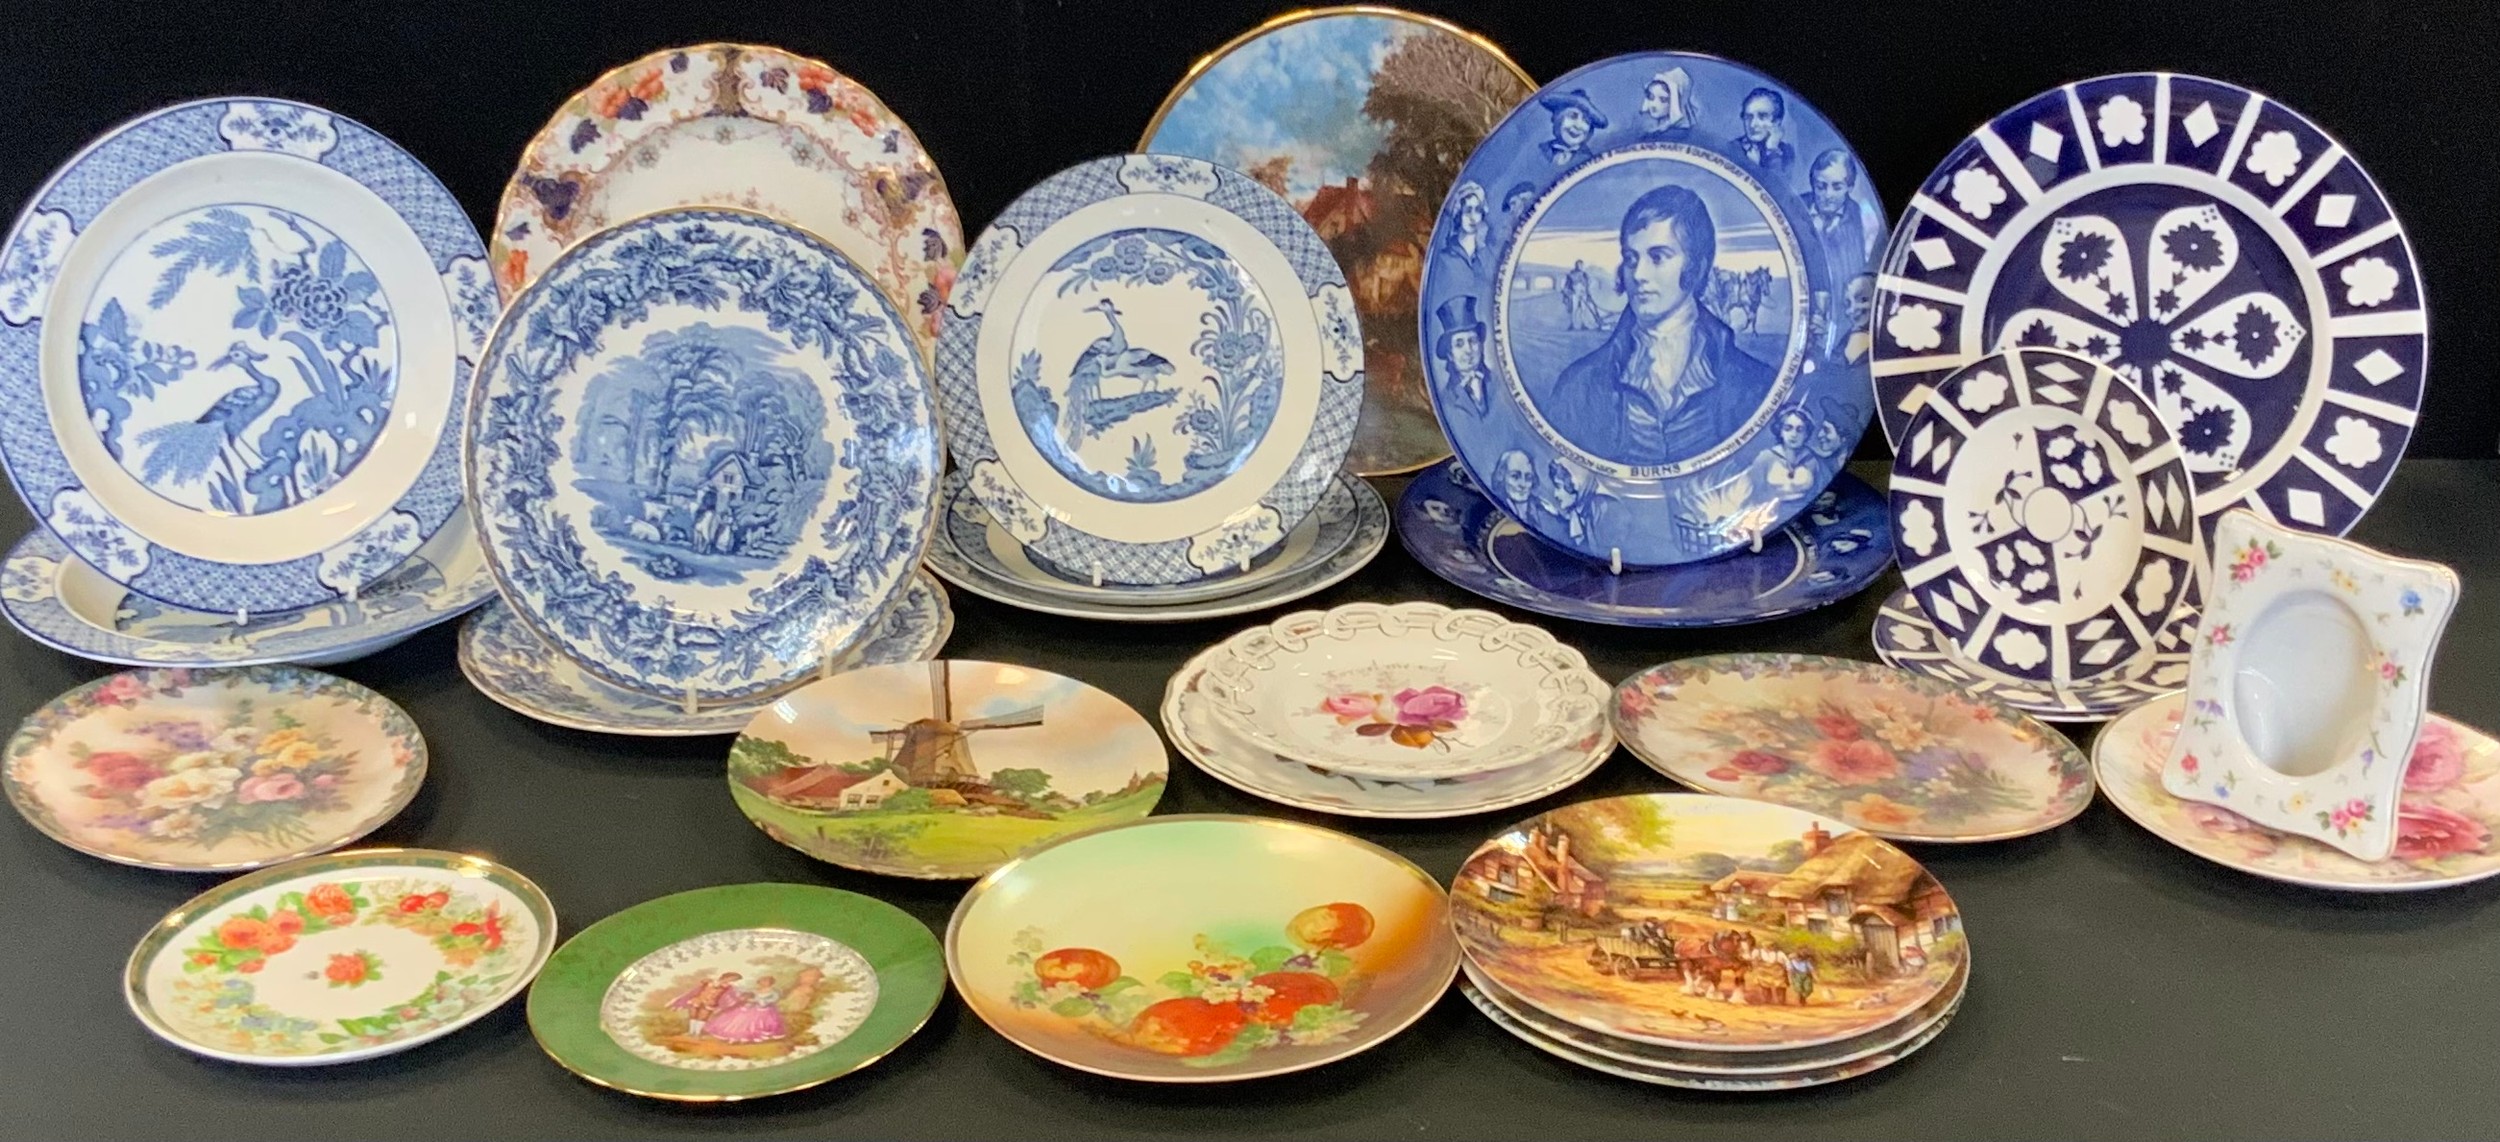 Collectors Plates - Wedgwood Country Days; Royal Albert Queen Elizabeth Rose; Royal Doulton Robert